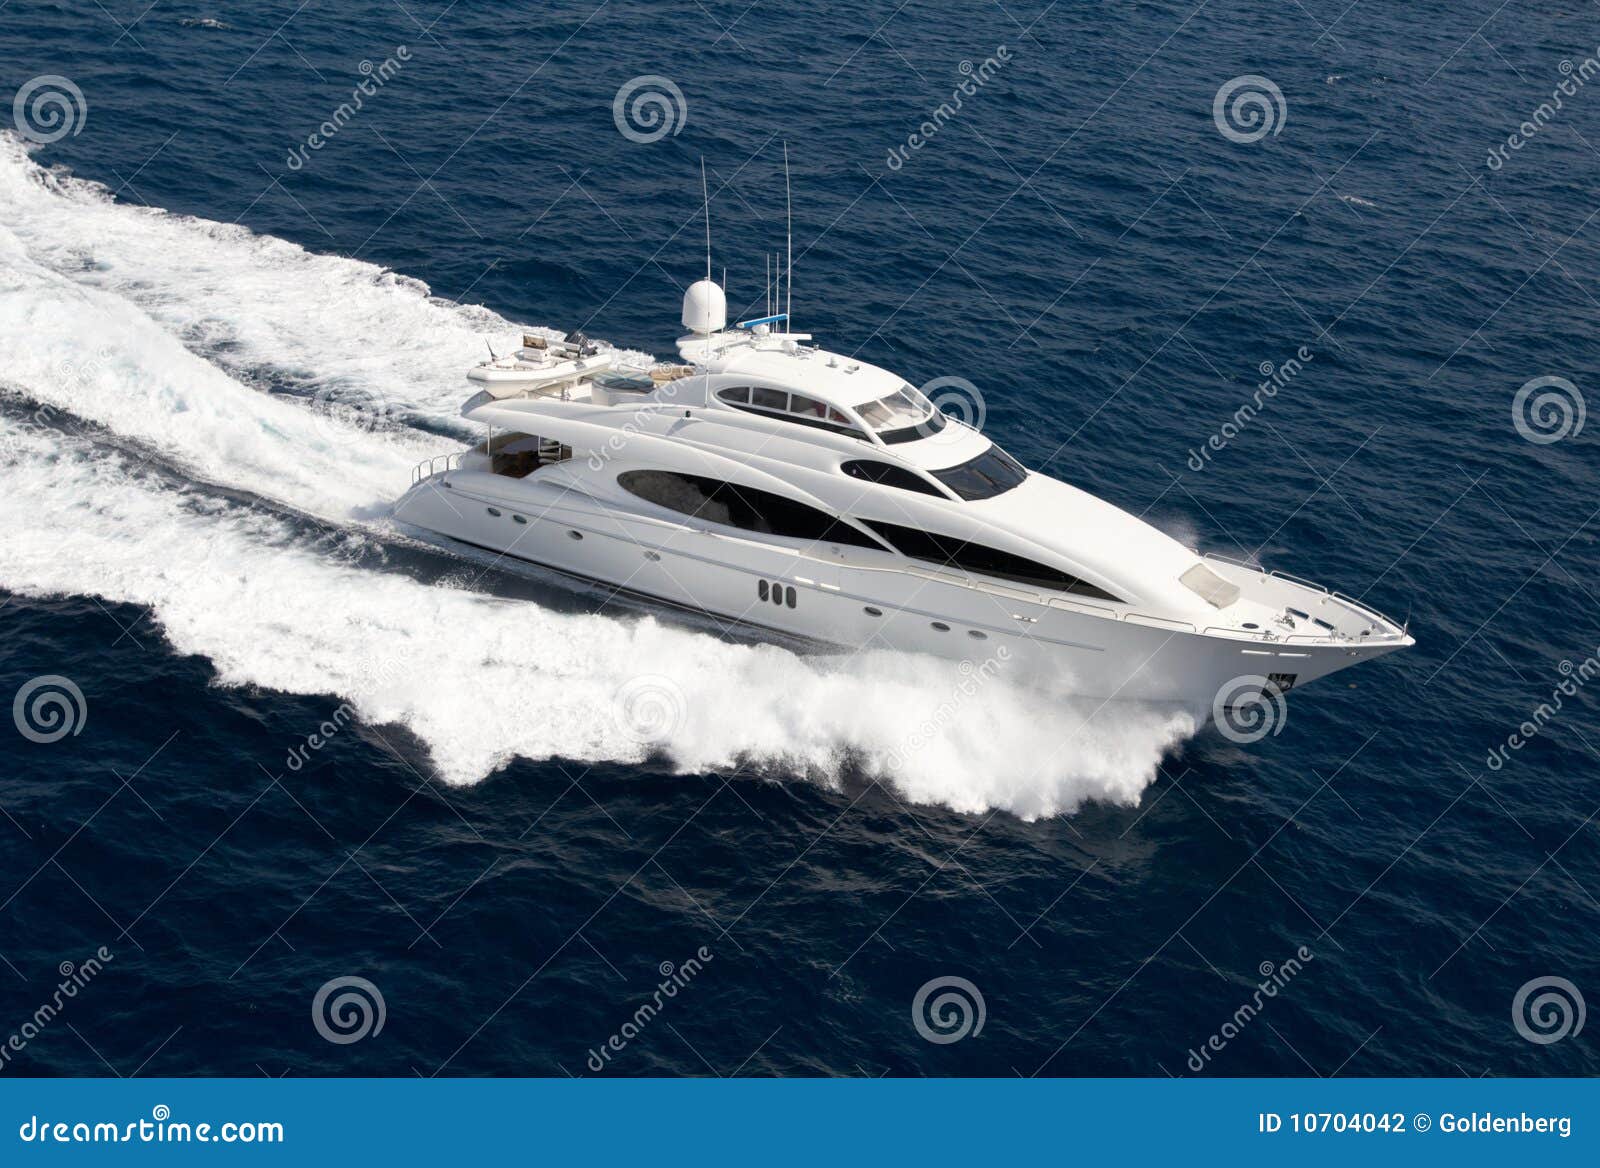 yacht stock photo